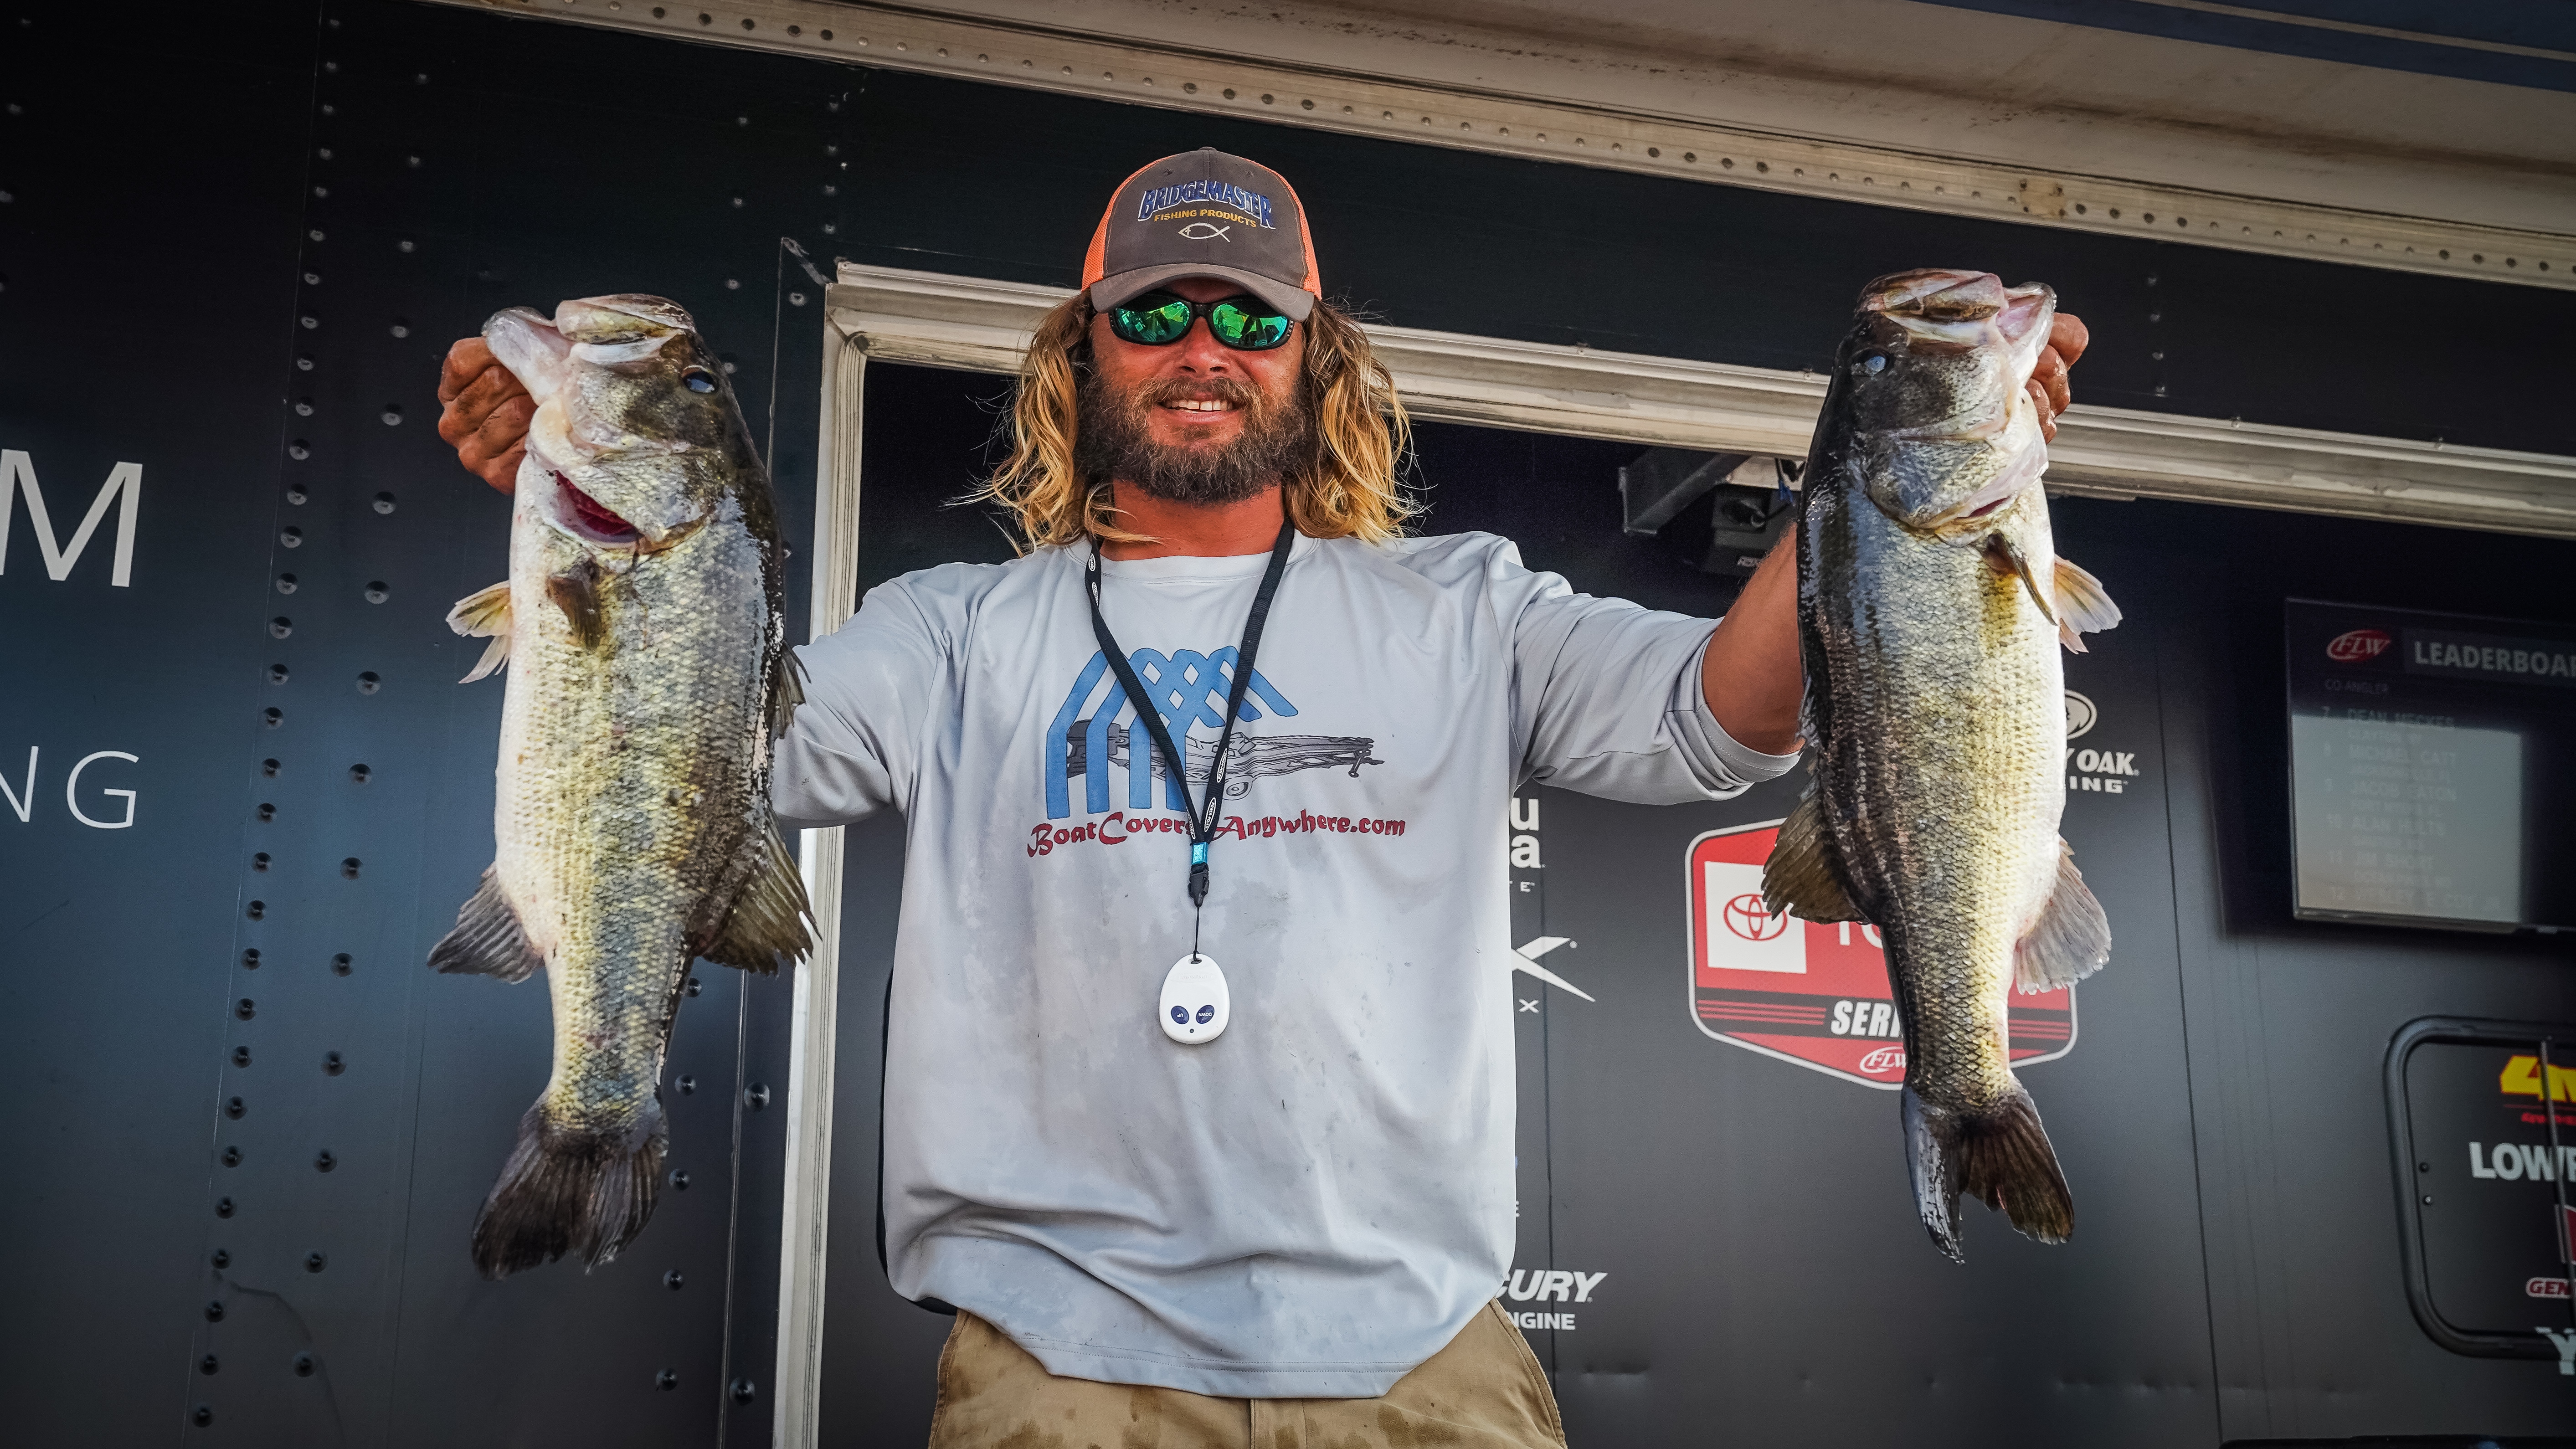 GALLERY: Cut Day Bags at Okeechobee - Major League Fishing